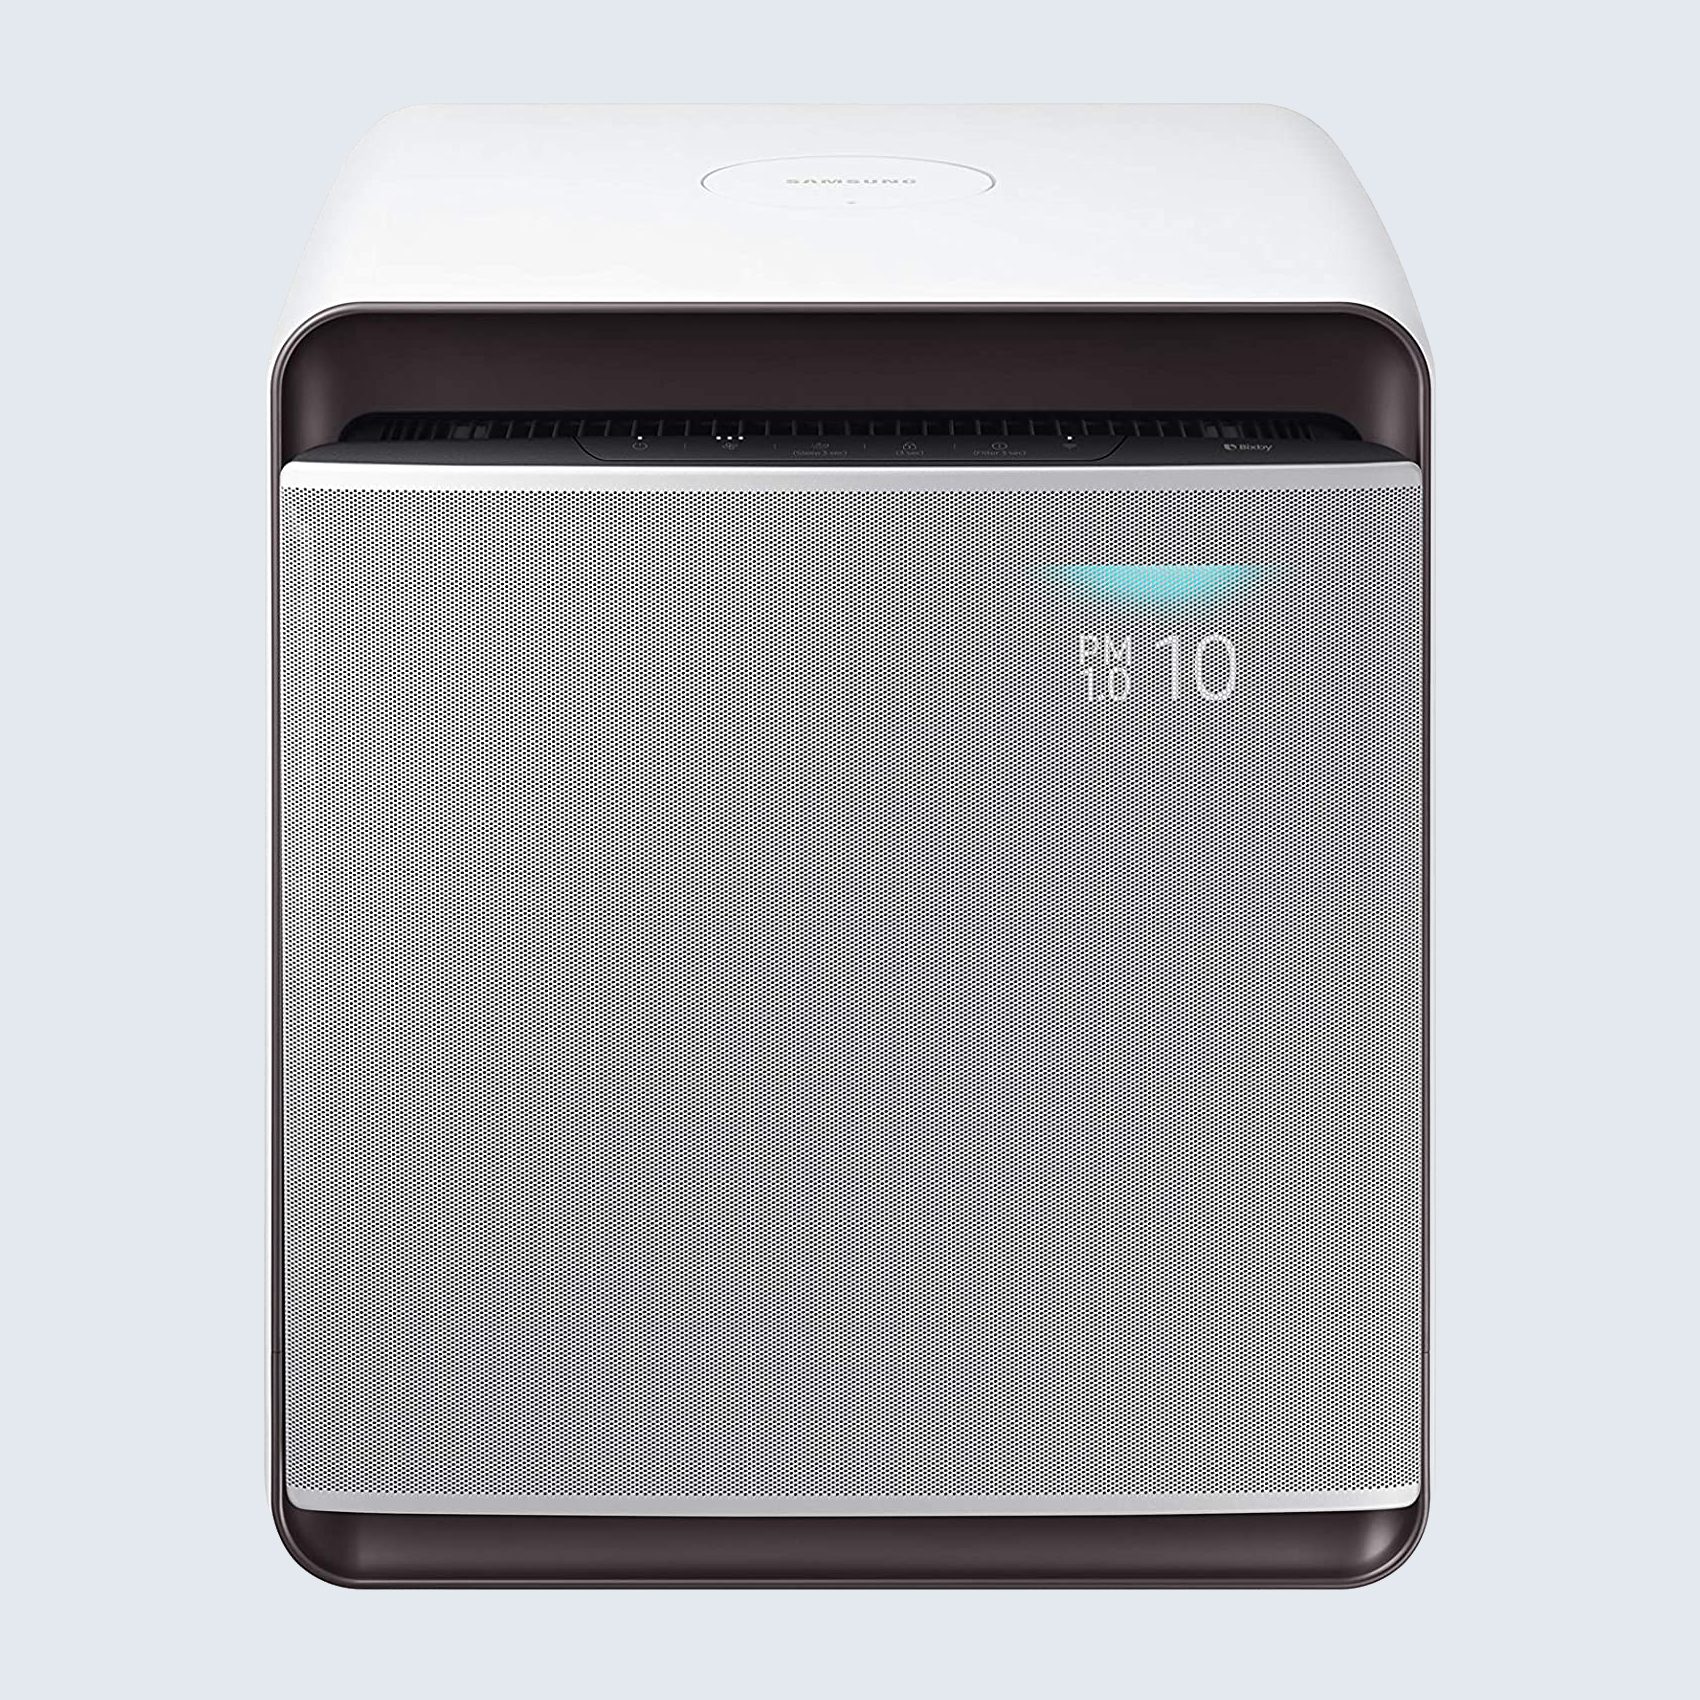 Samsung Cube Smart Air Purifier